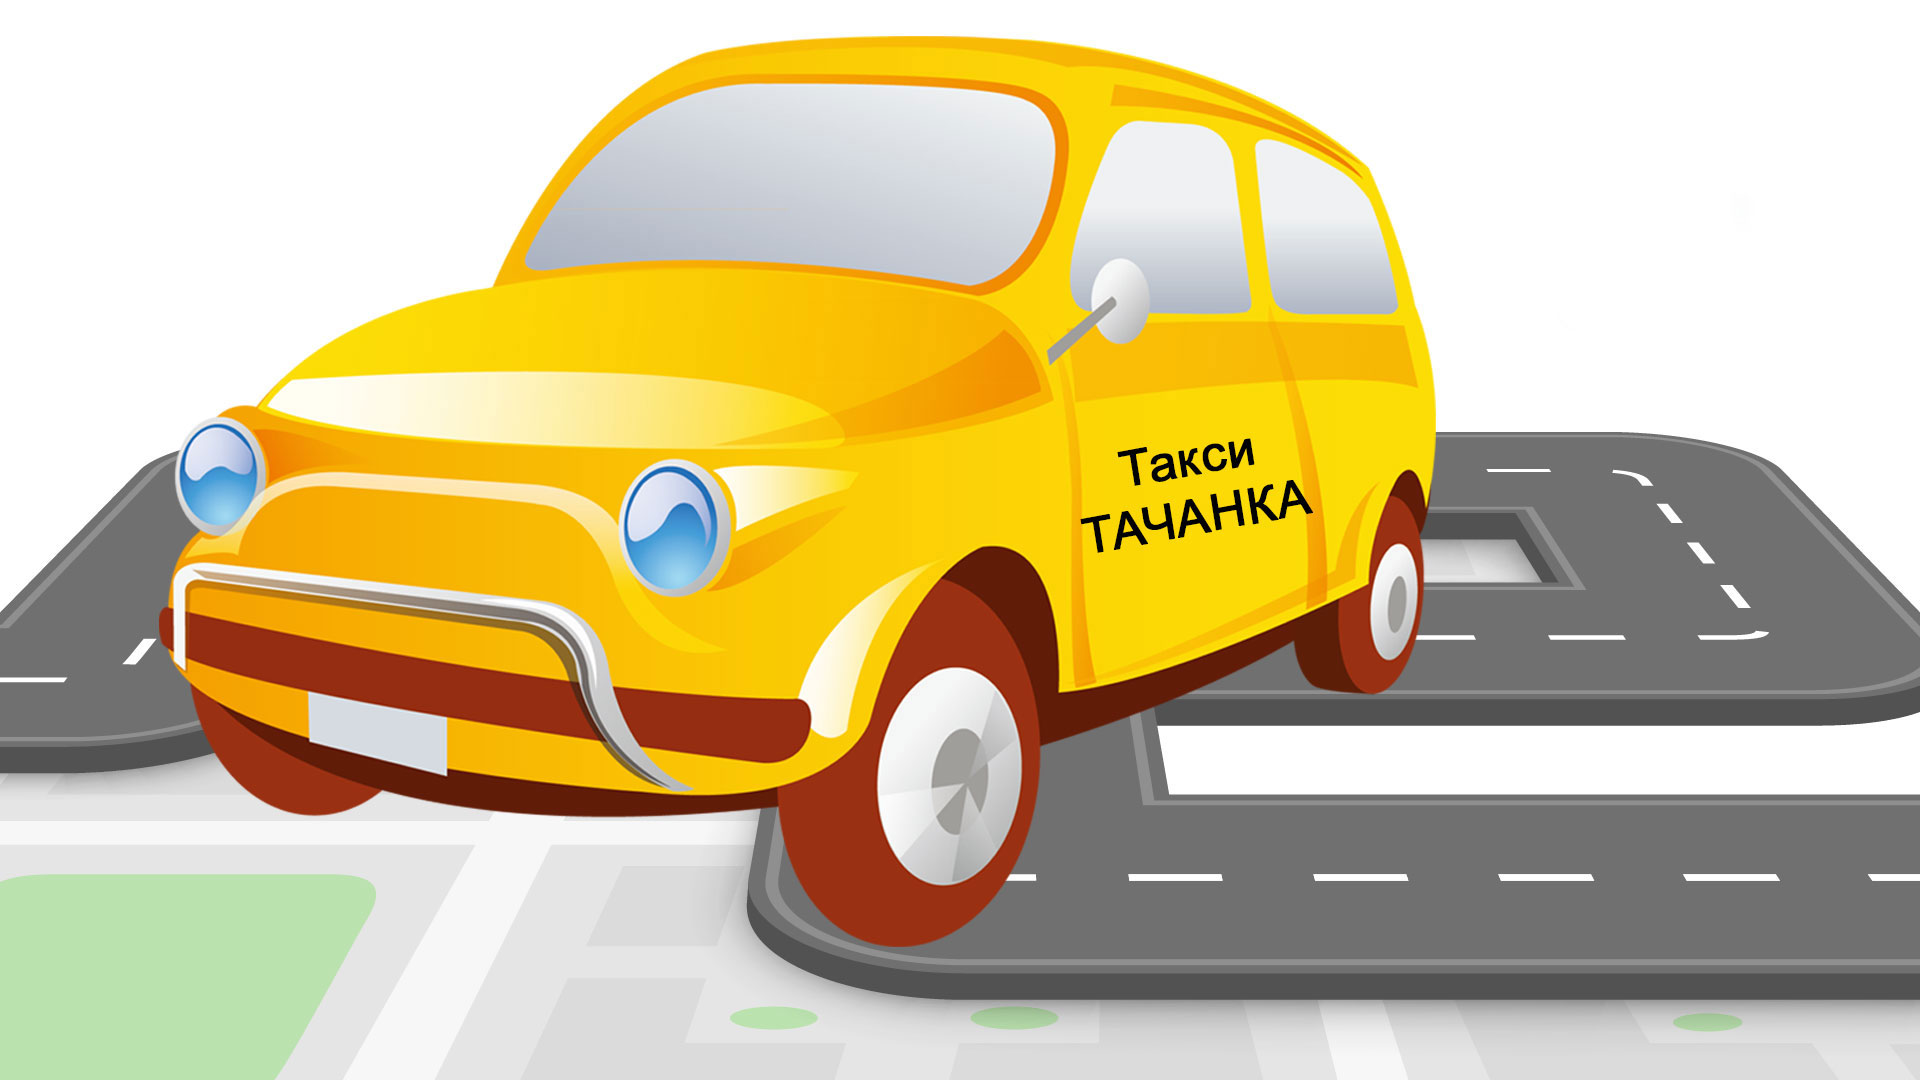 Машина с наклейкой такси "Тачанка".